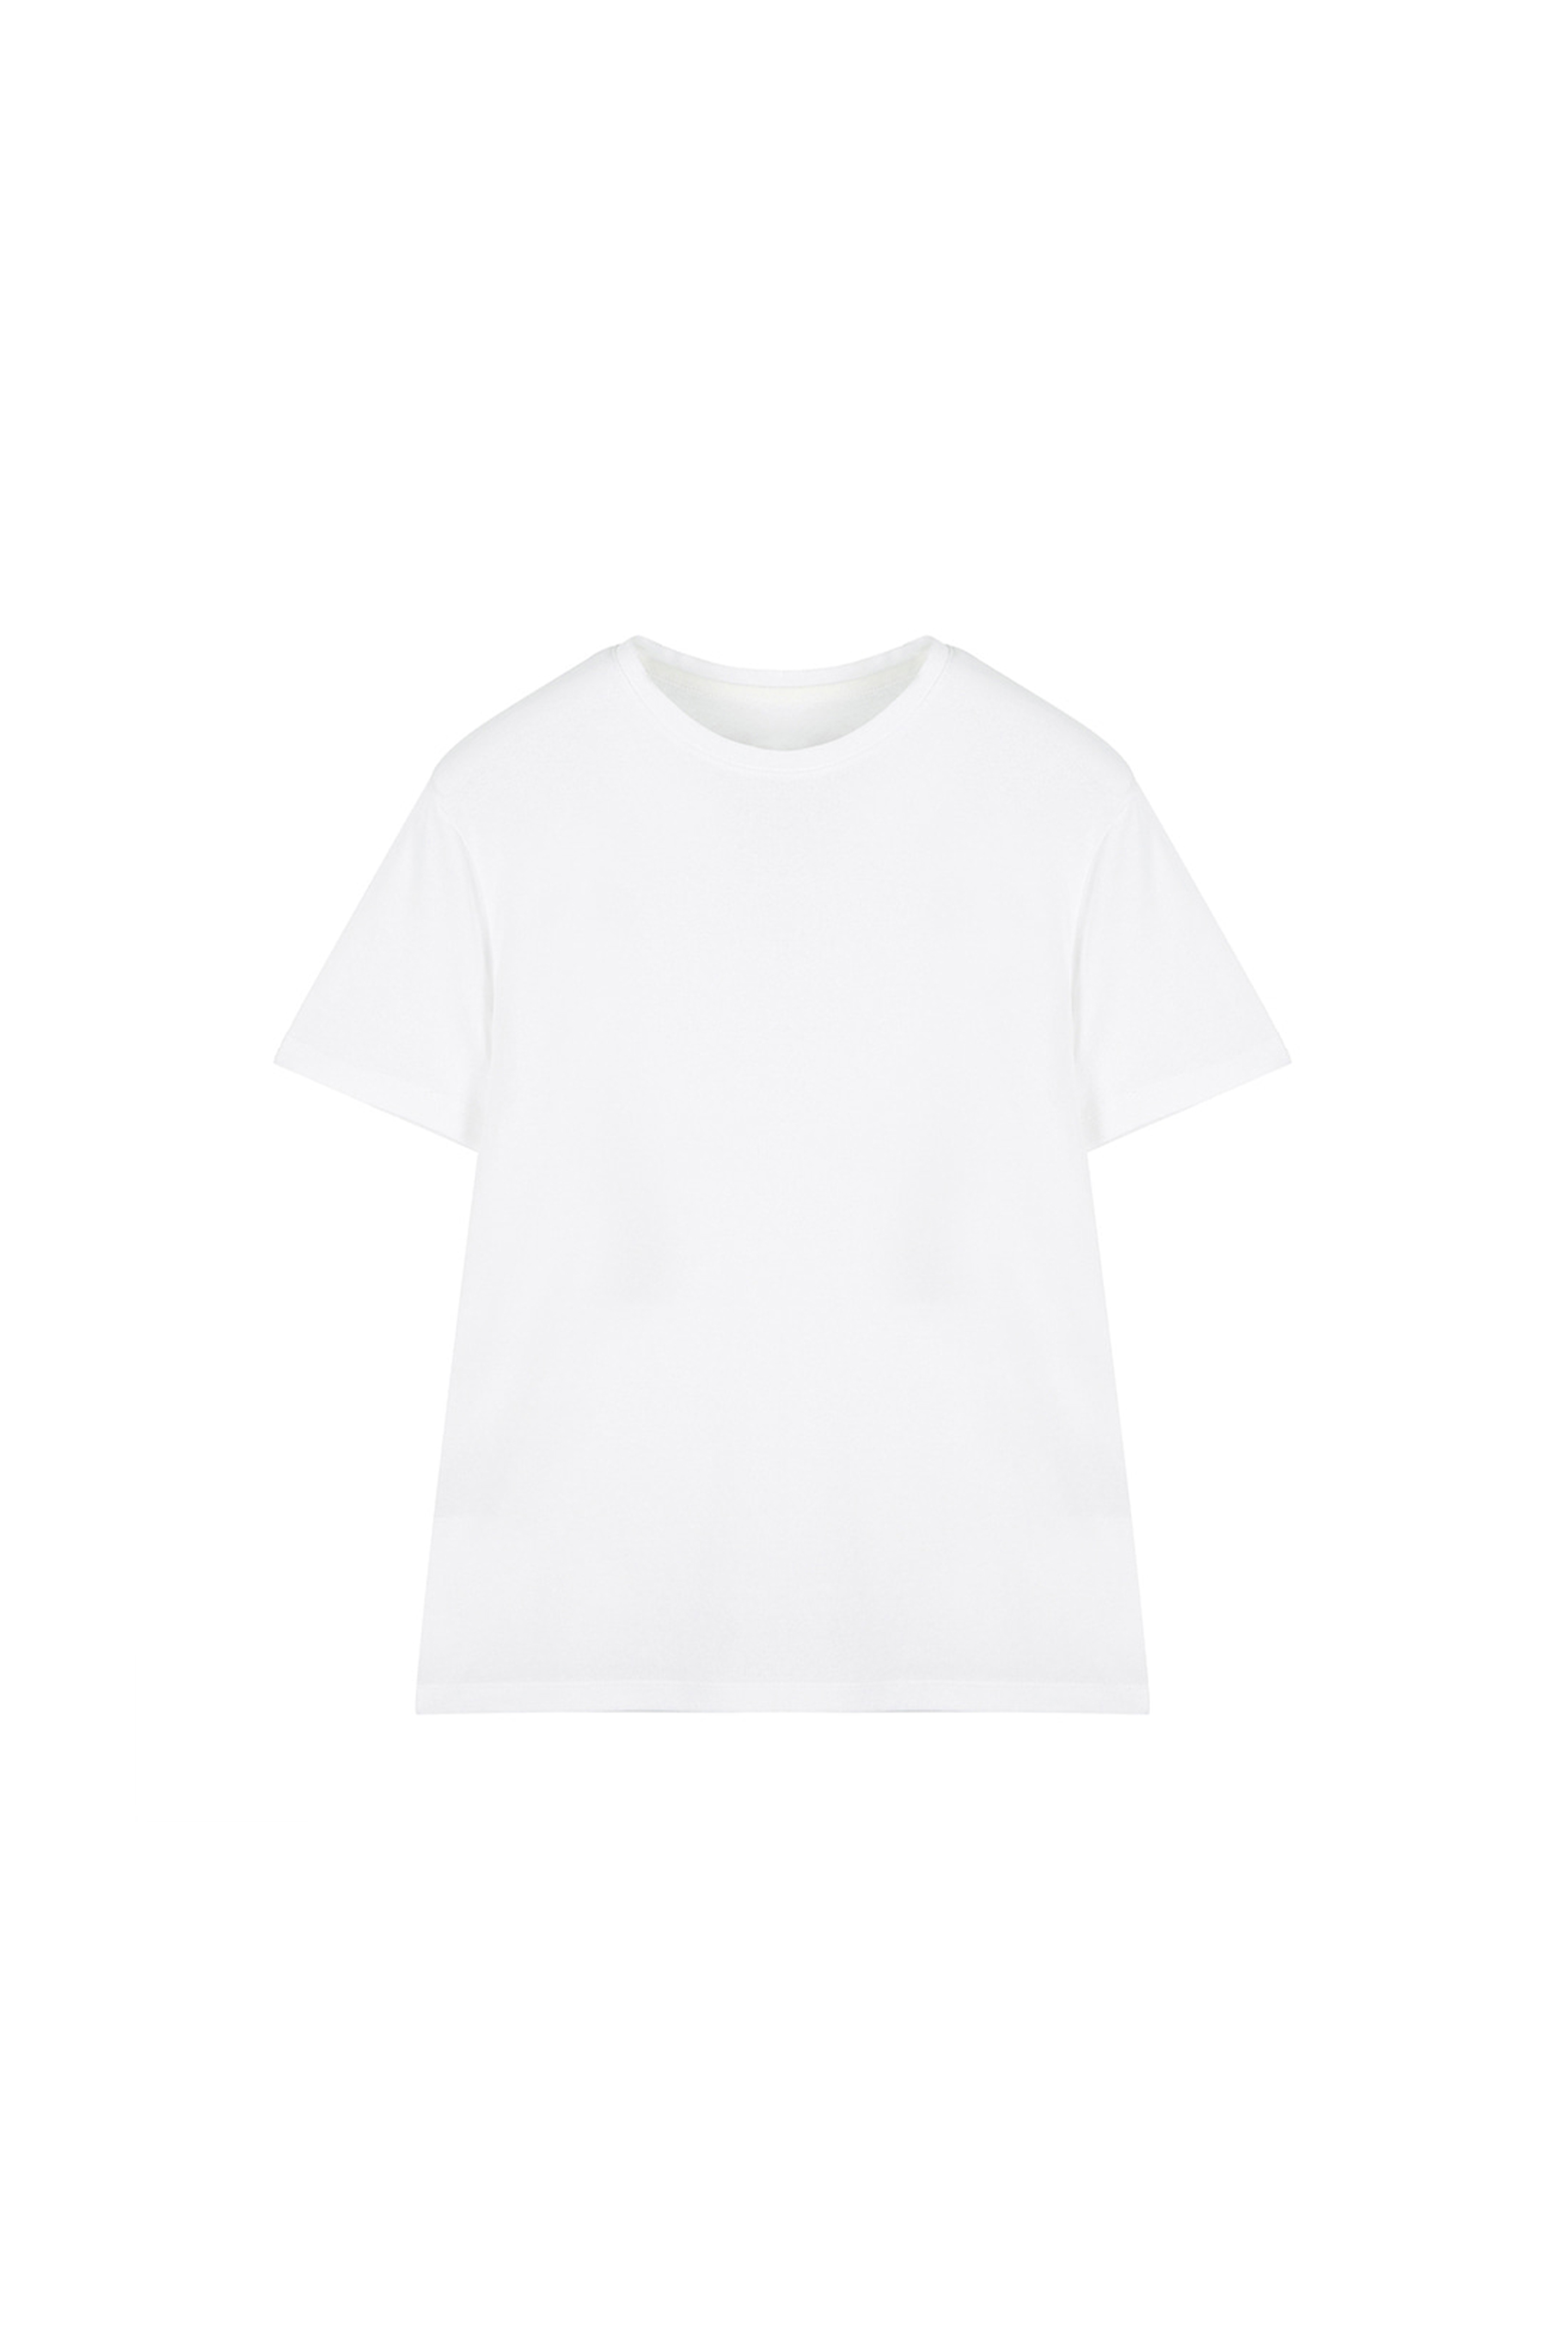 ORE COTTON 002 T-shirt White